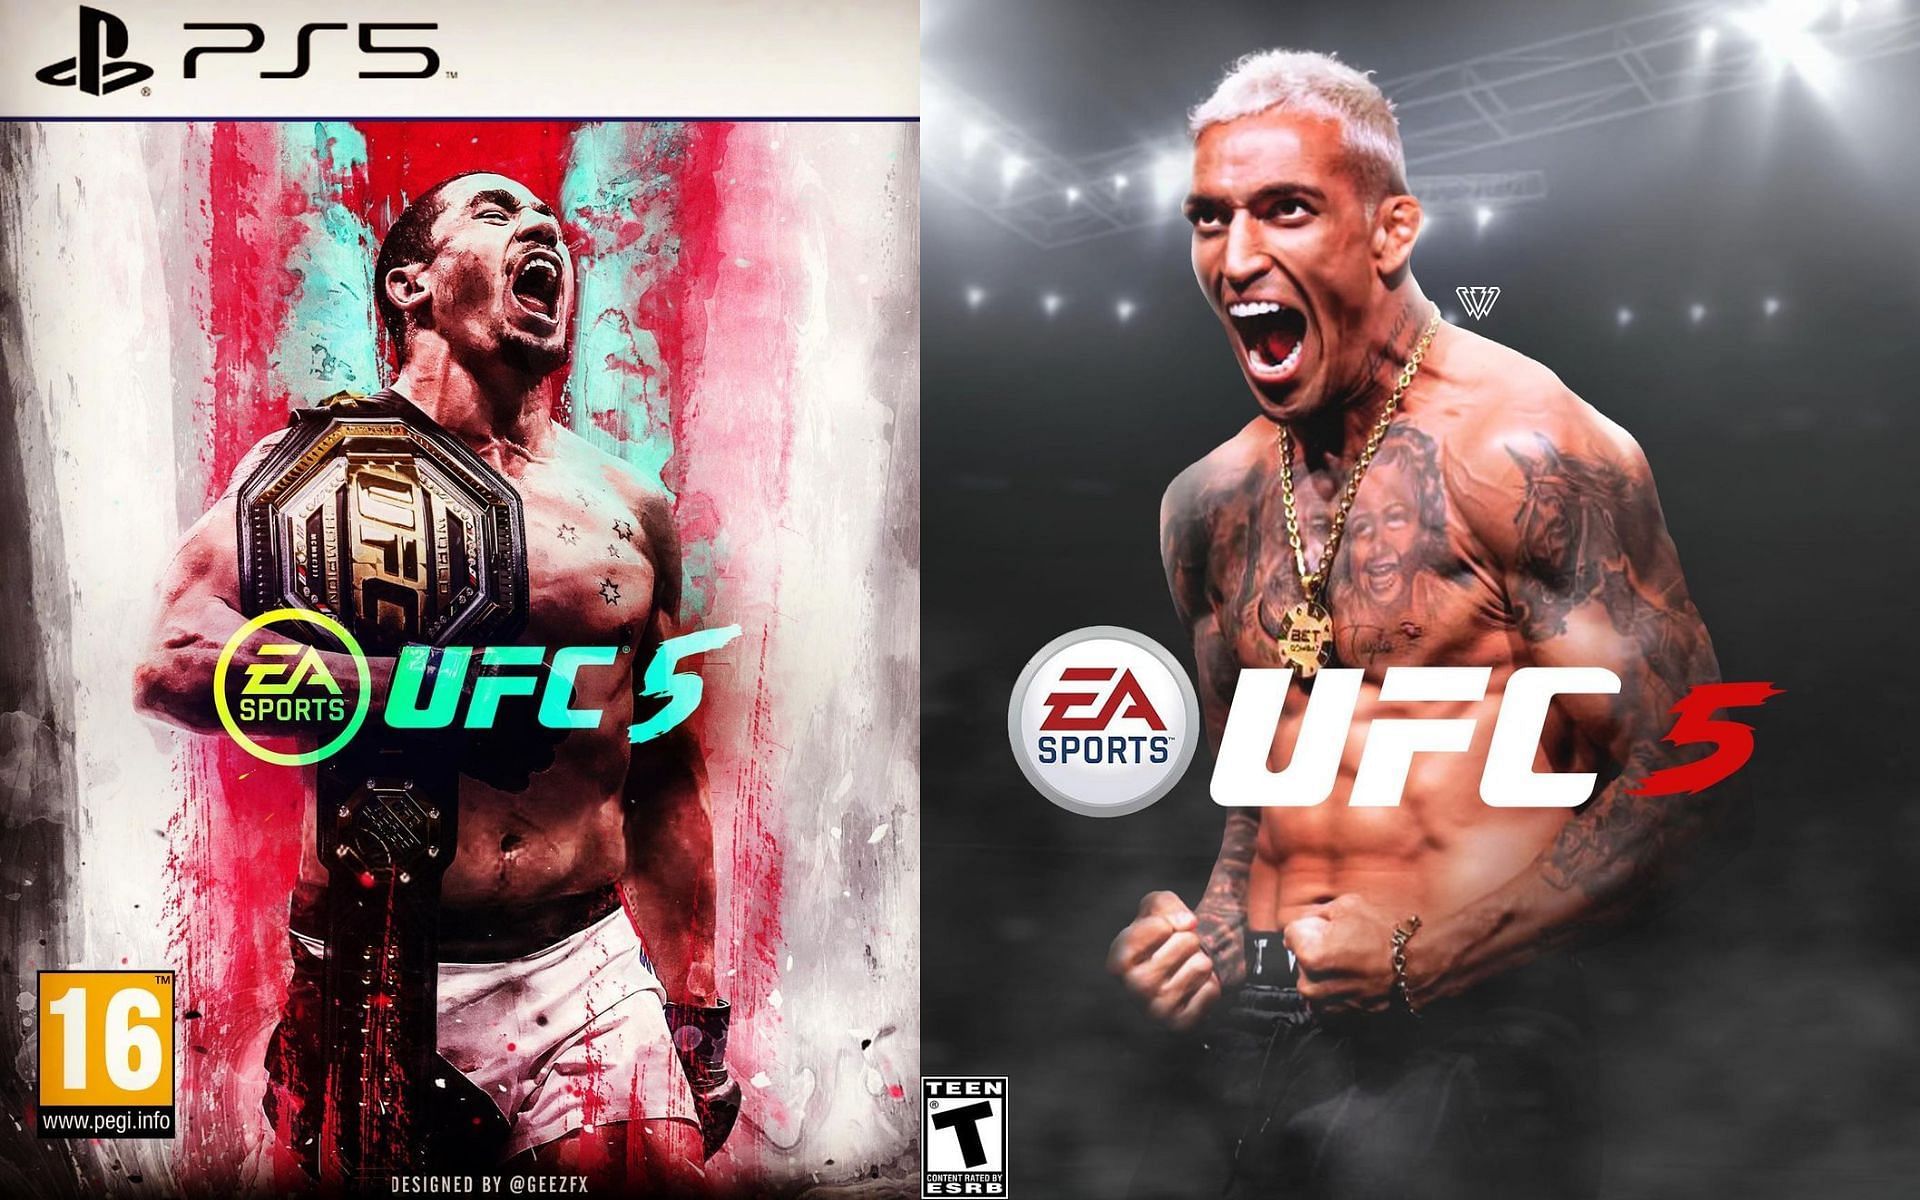 UFC 5 fan posters (image courtesy @wynters_designs @playstationband Instagram)